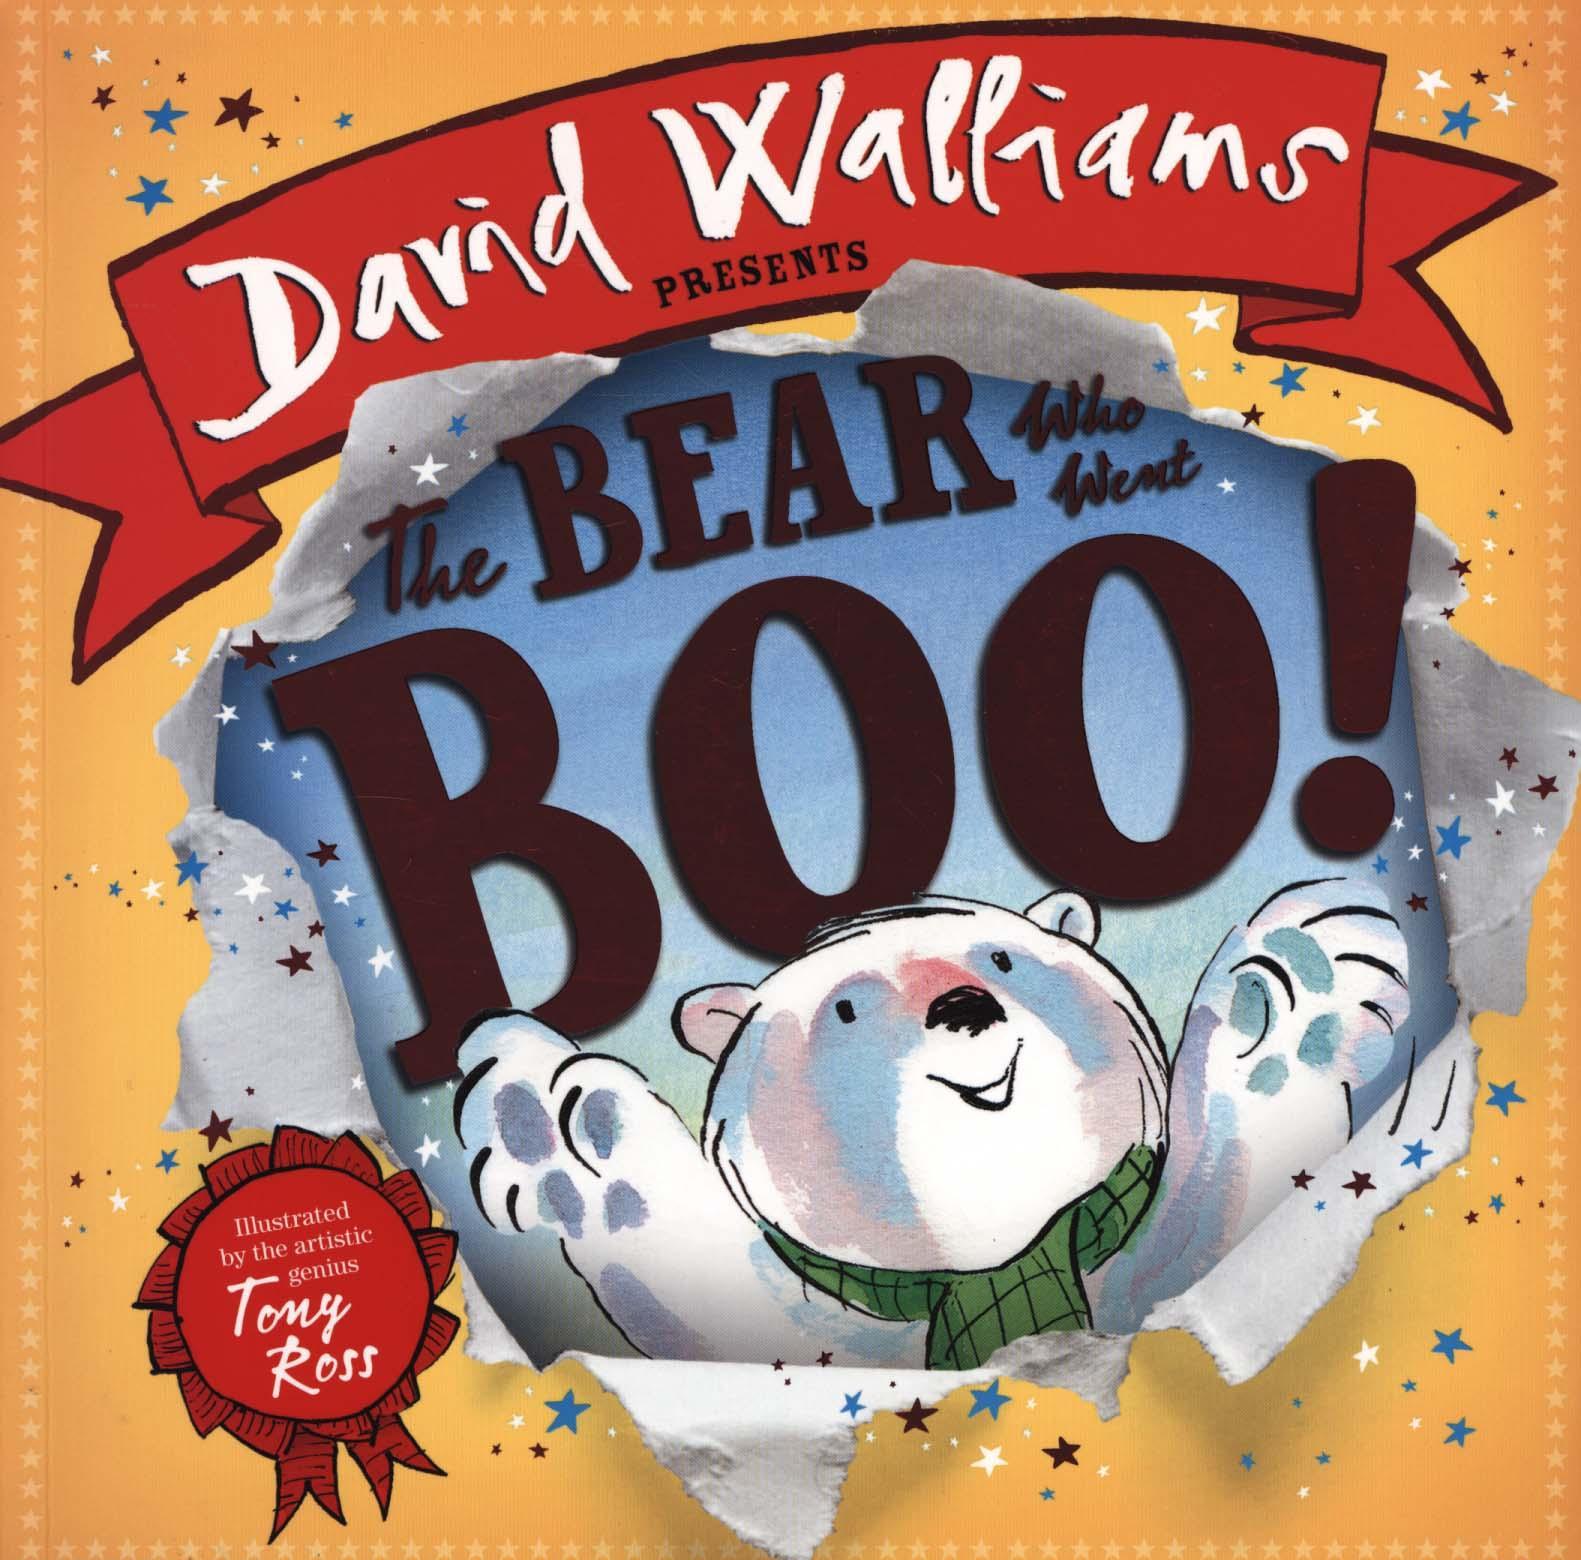 Bear Who Went Boo! - David Walliams